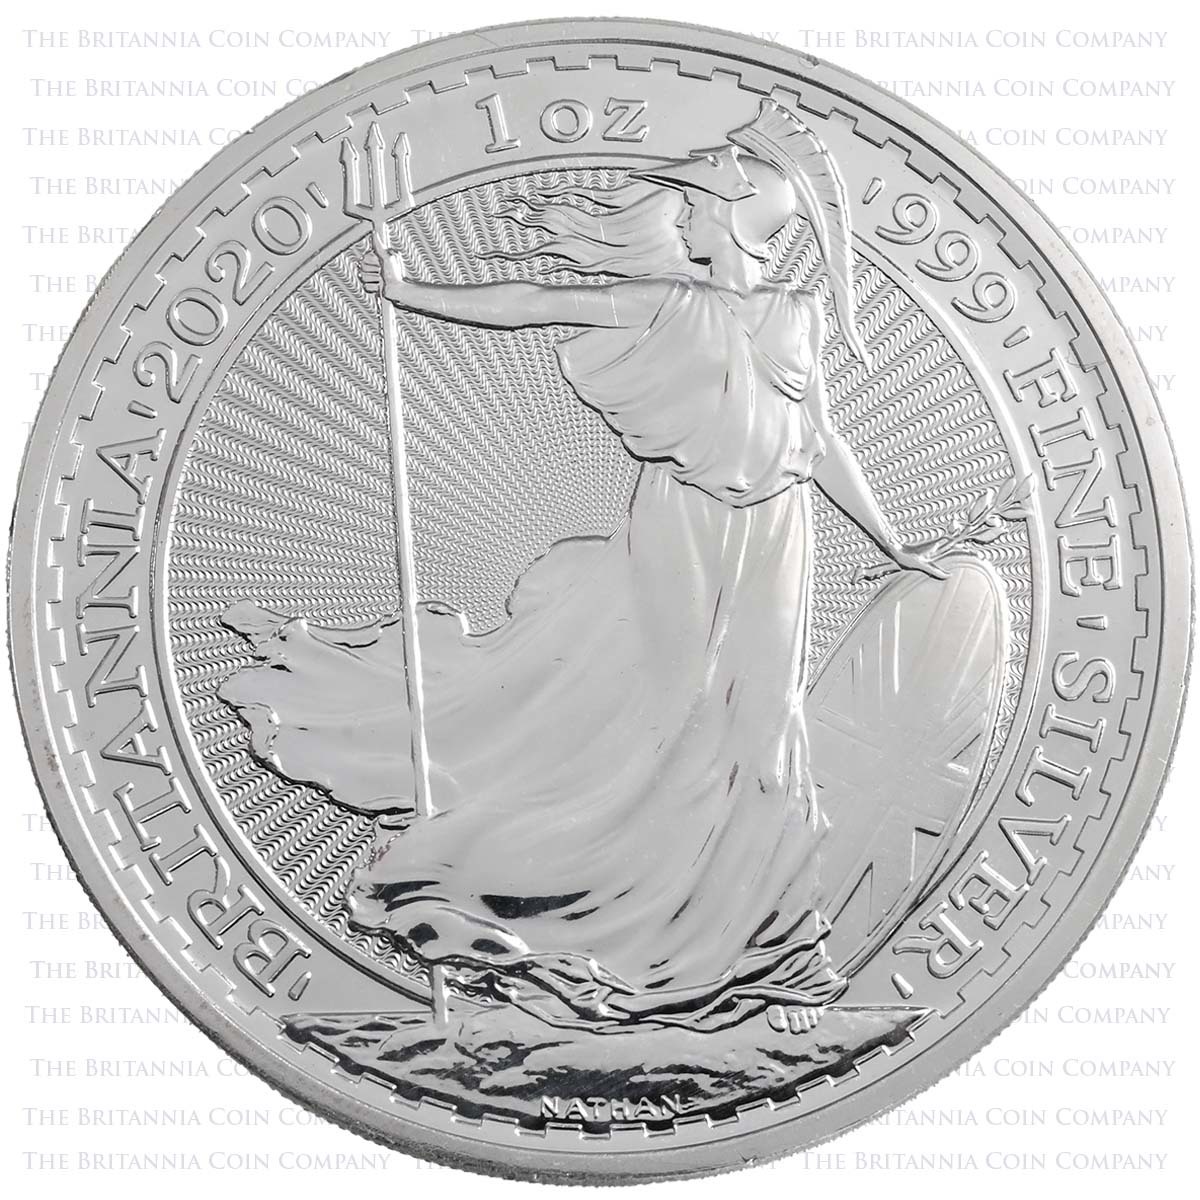 2019 Britannia One Ounce Silver Bullion Coin Obverse